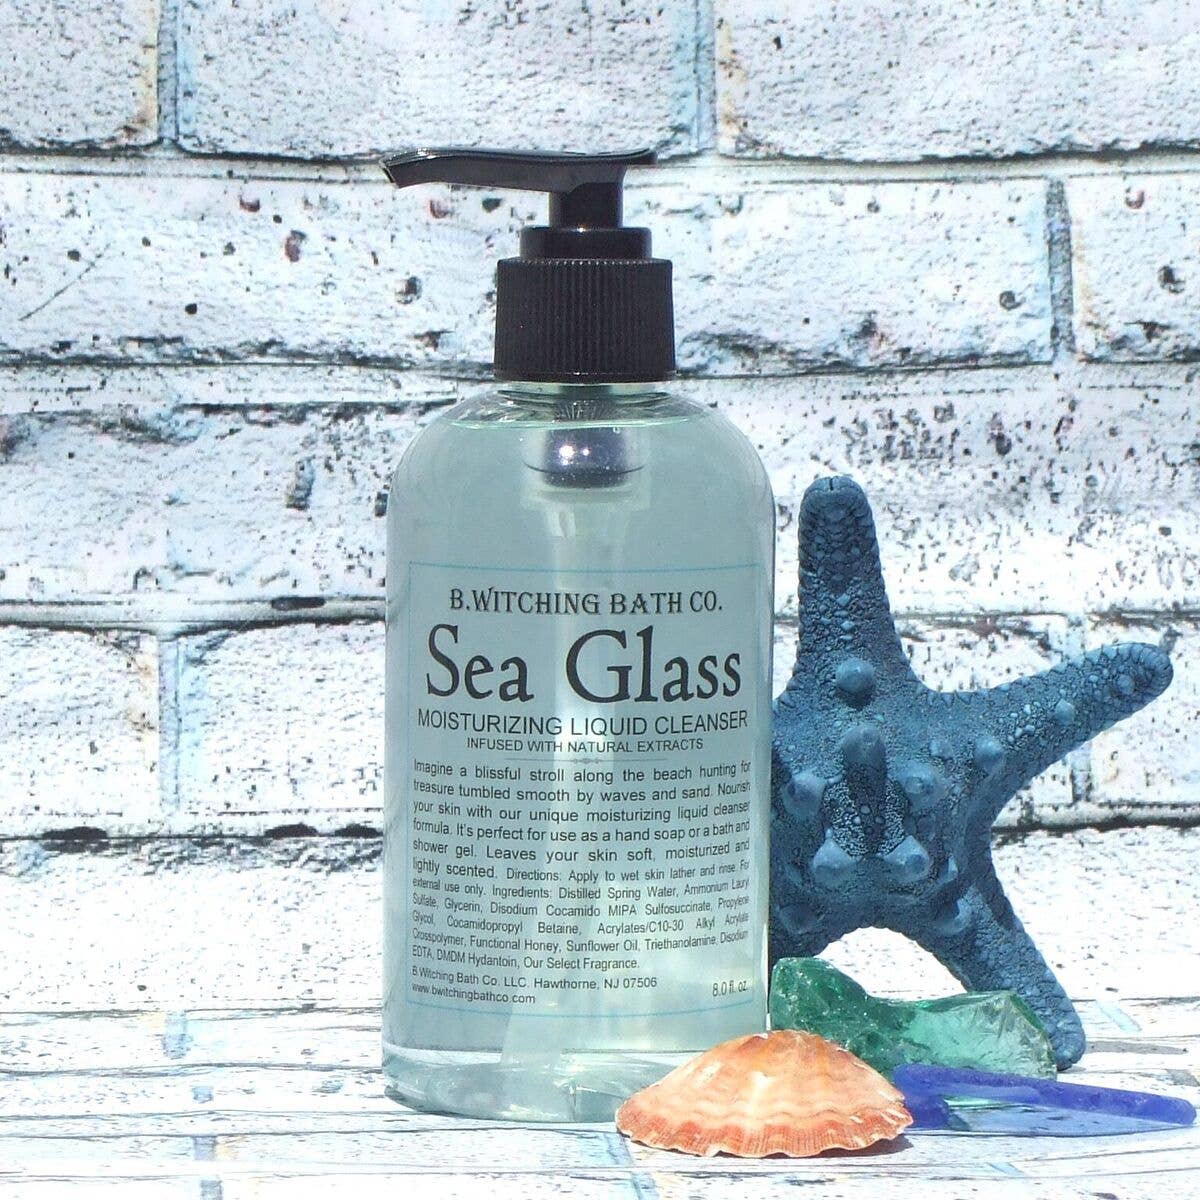 Sea Glass Moisturizing Liquid Cleansers 8oz.